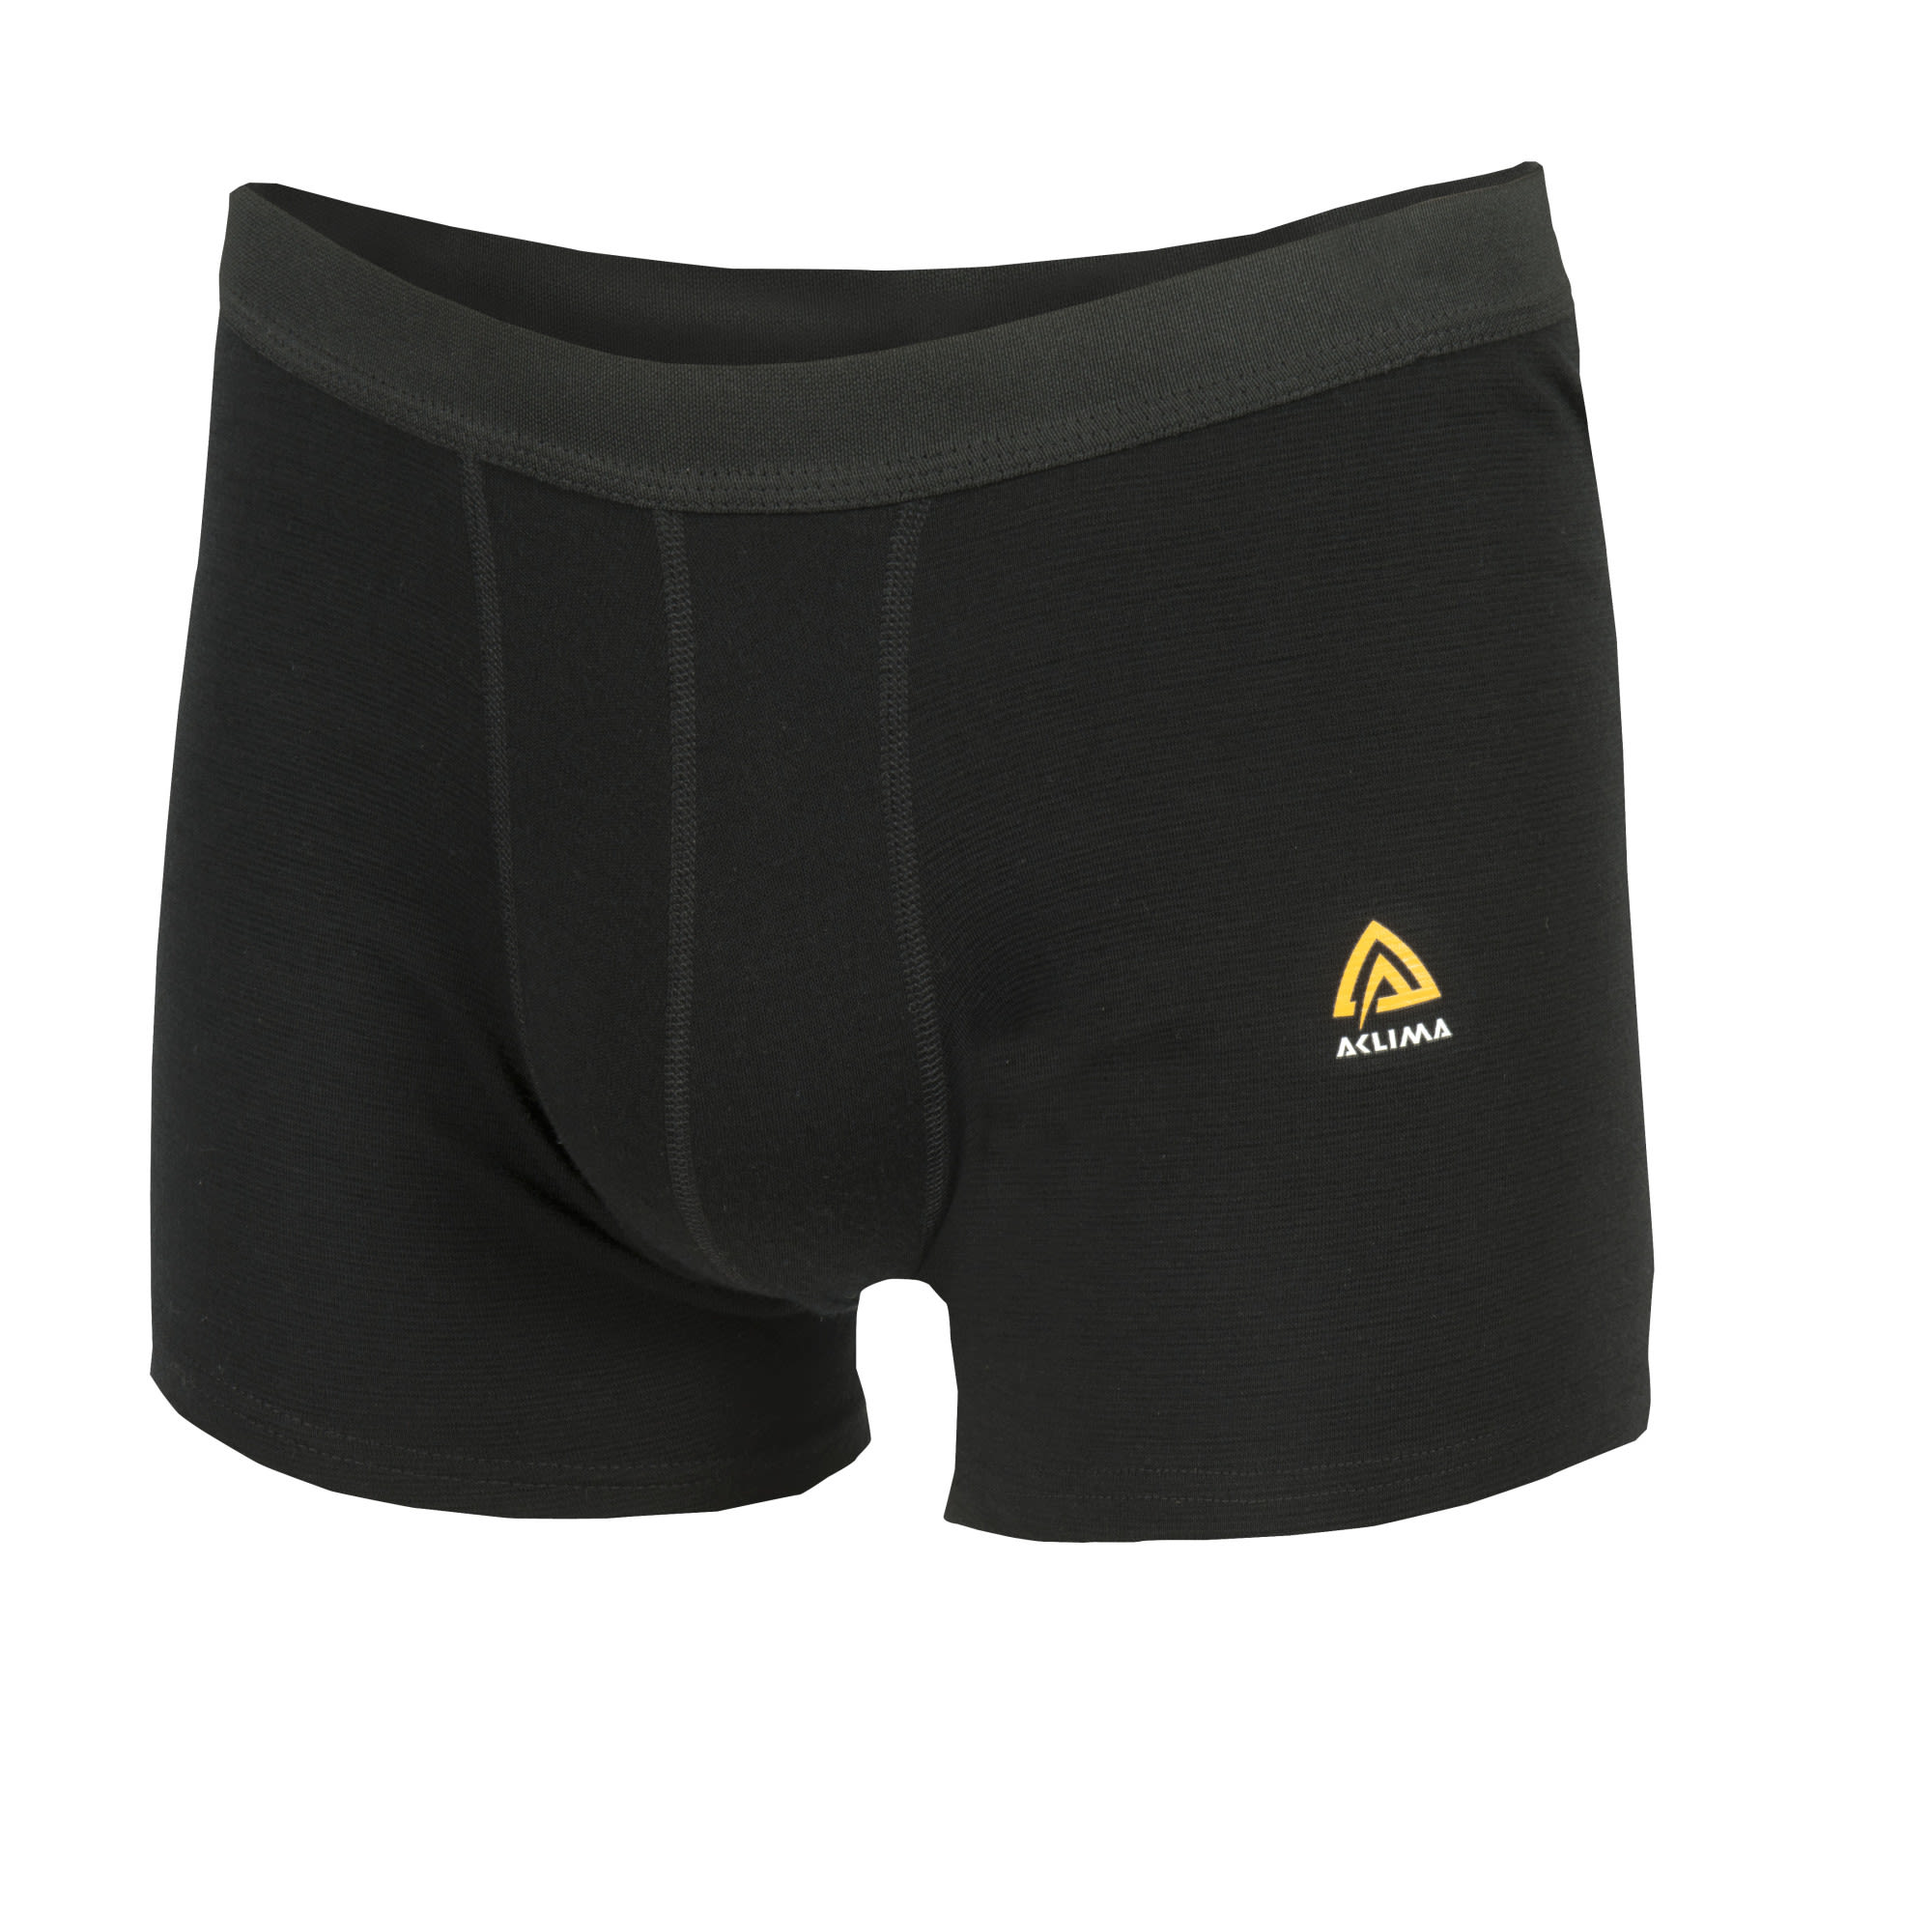 Aclima Warmwool Shorts Schwarz- Male Merino Lange Unterhosen- Grsse XS - Farbe Jet Black